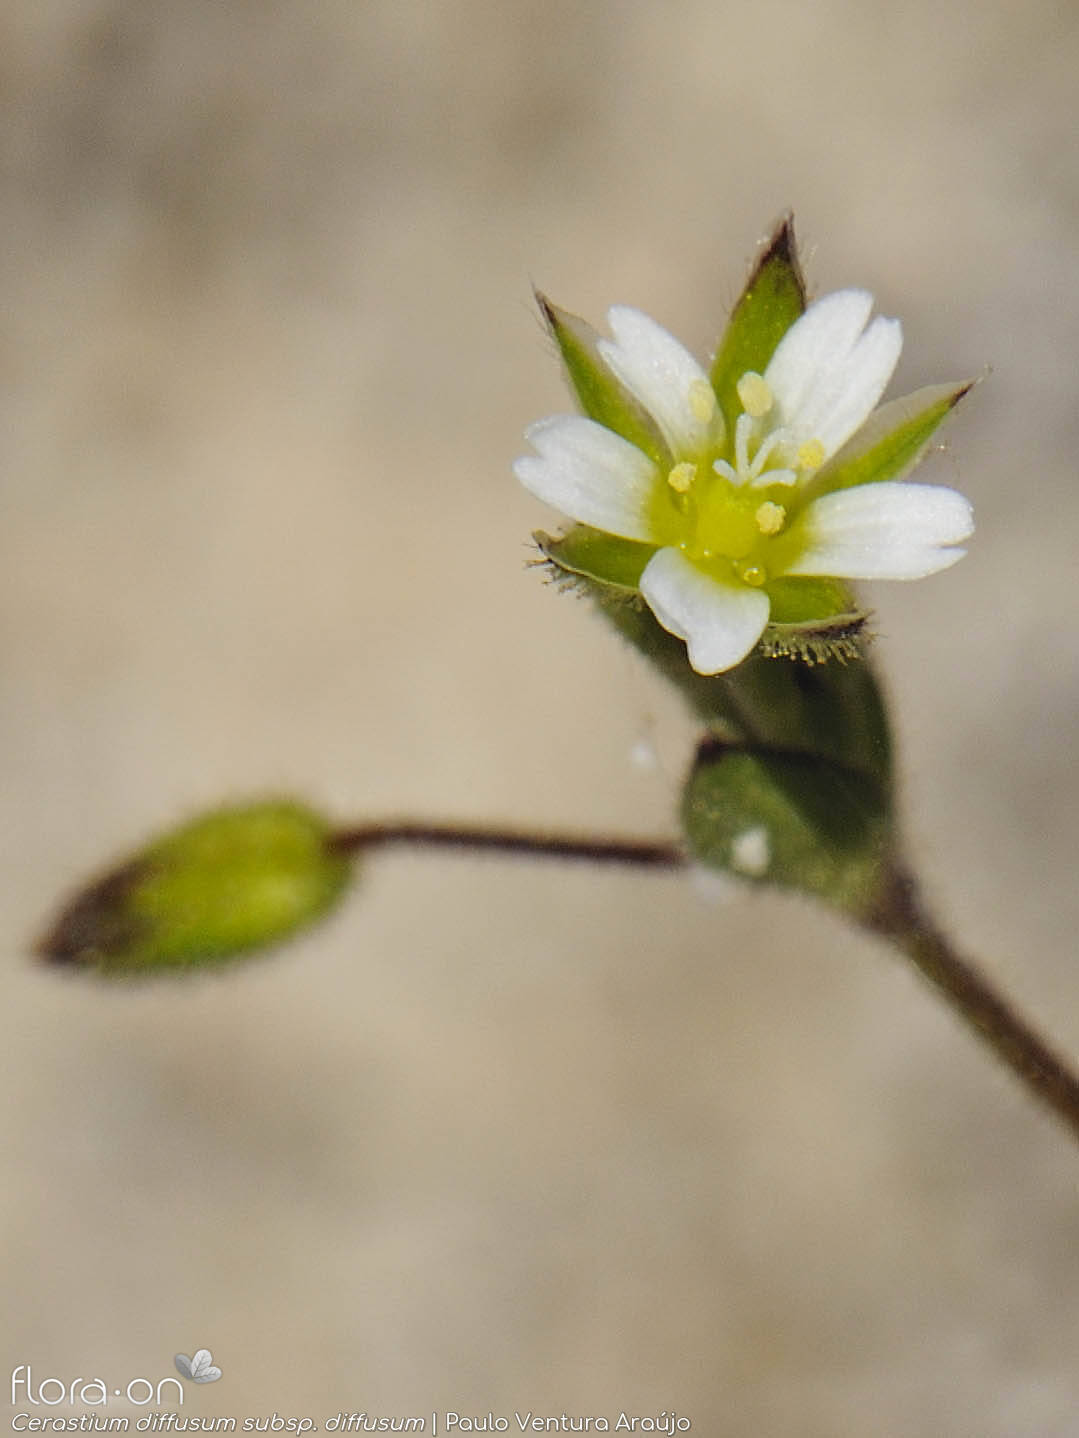 Cerastium diffusum diffusum - Flor (close-up) | Paulo Ventura Araújo; CC BY-NC 4.0